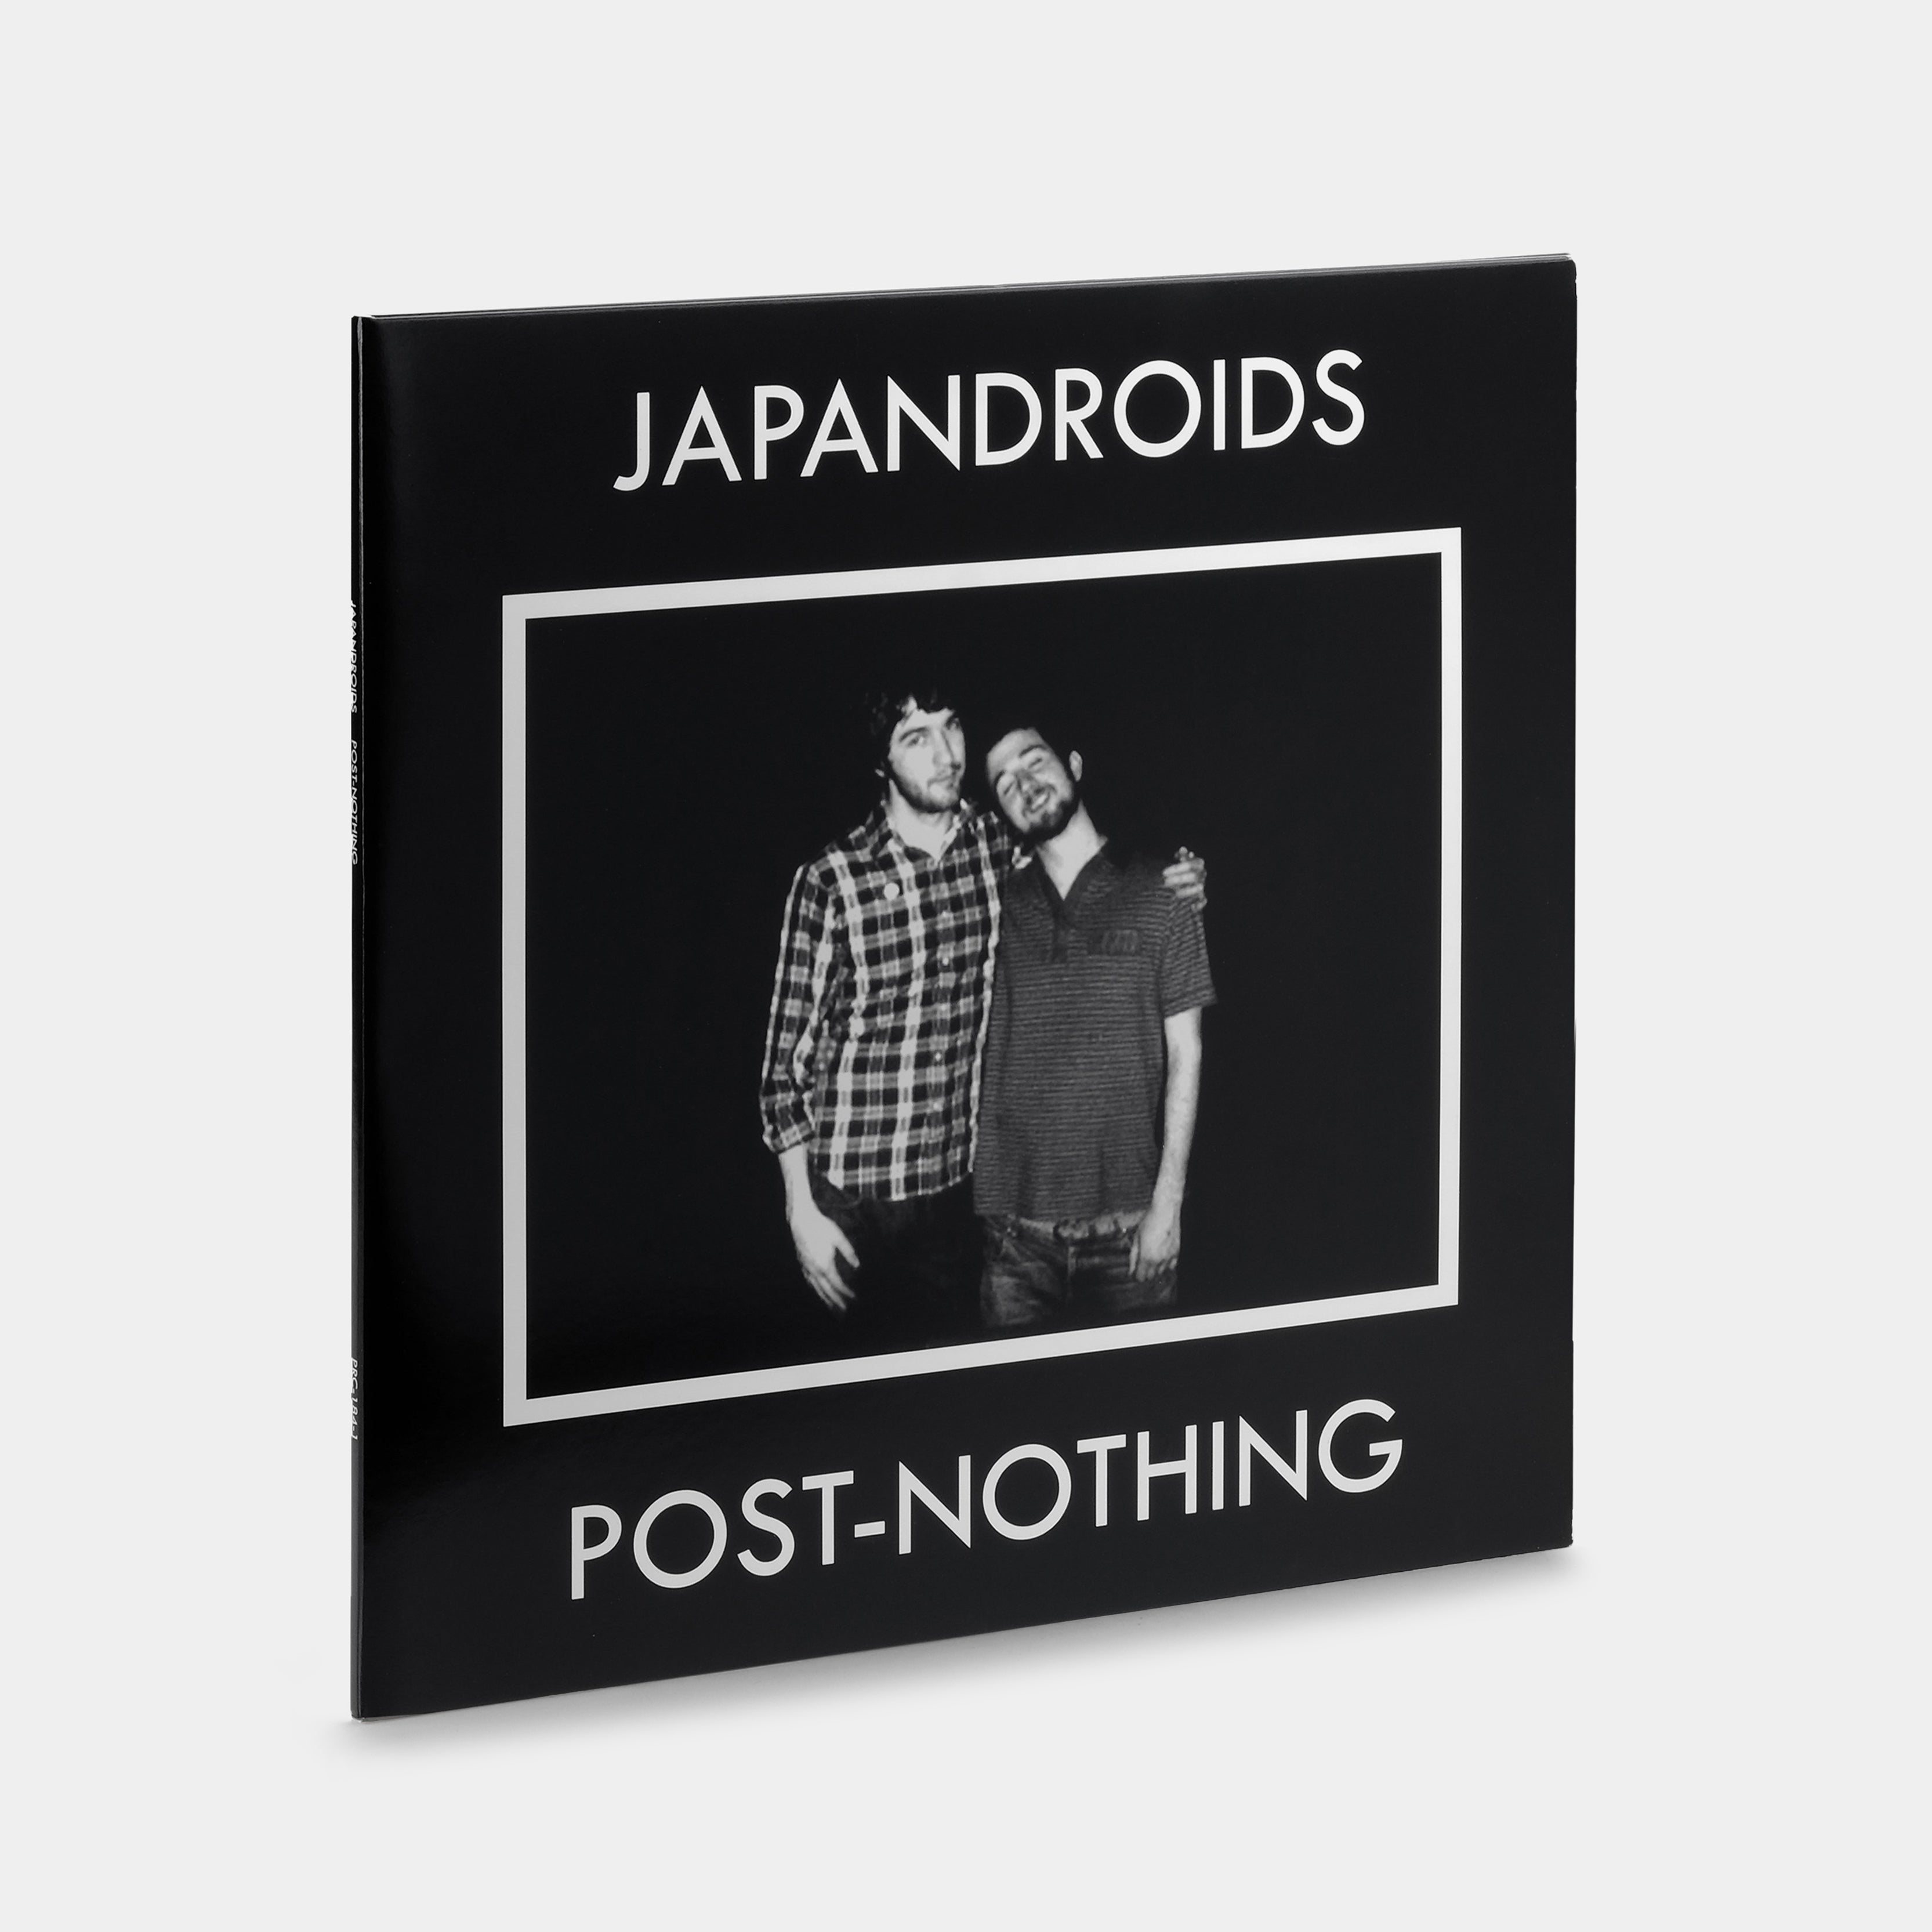 Japandroids - Post-Nothing LP Vinyl Record